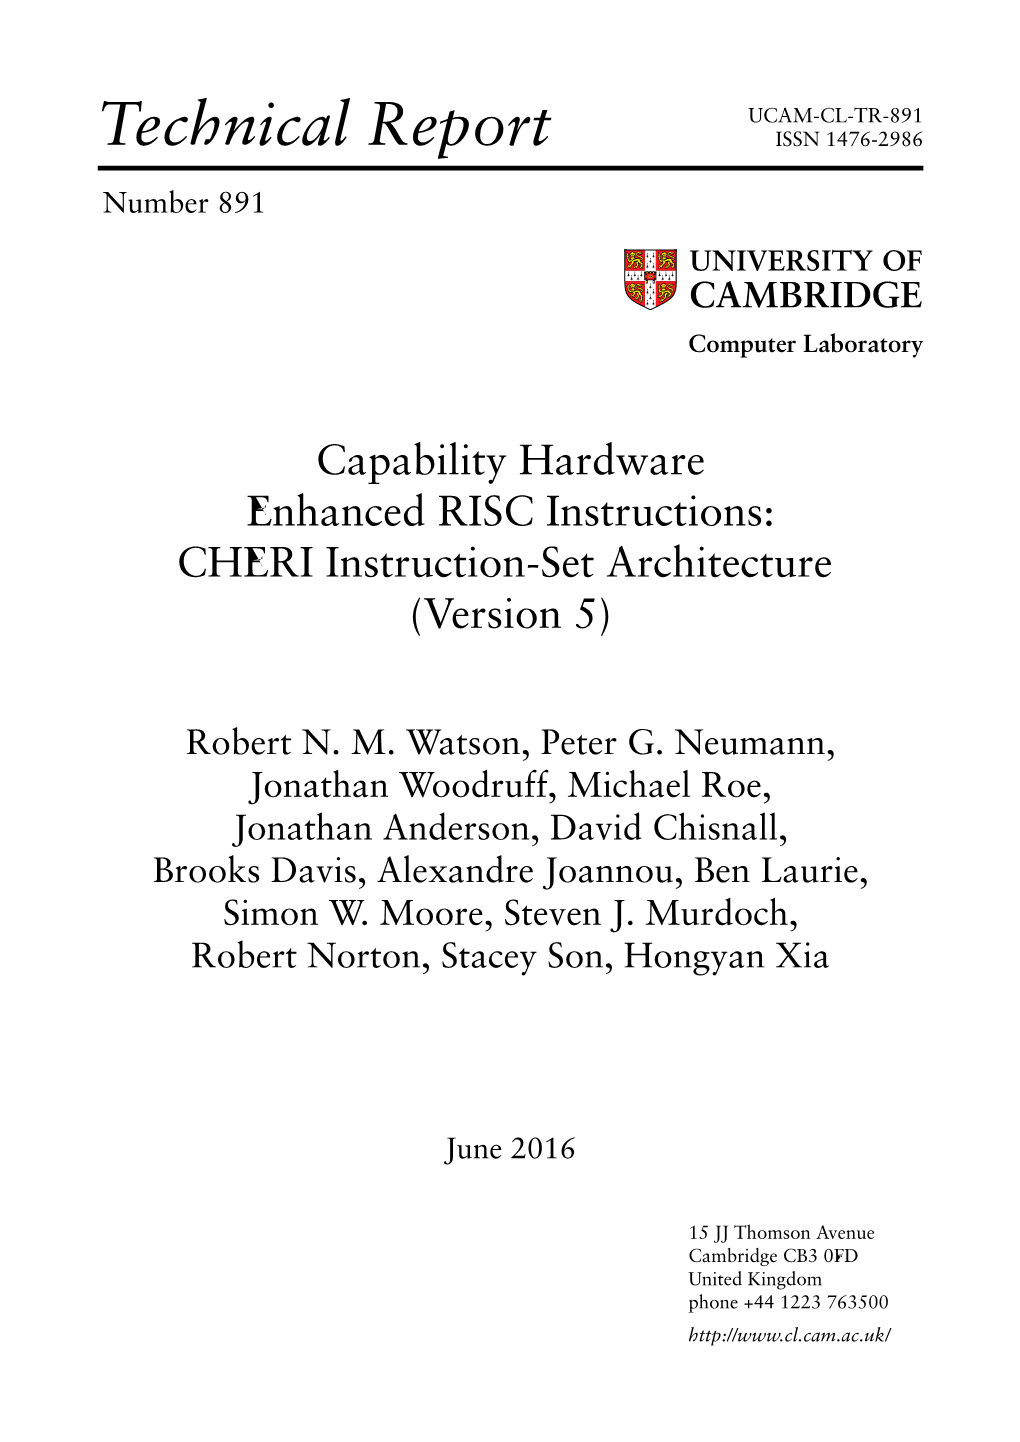 CHERI Instruction-Set Architecture (Version 5)